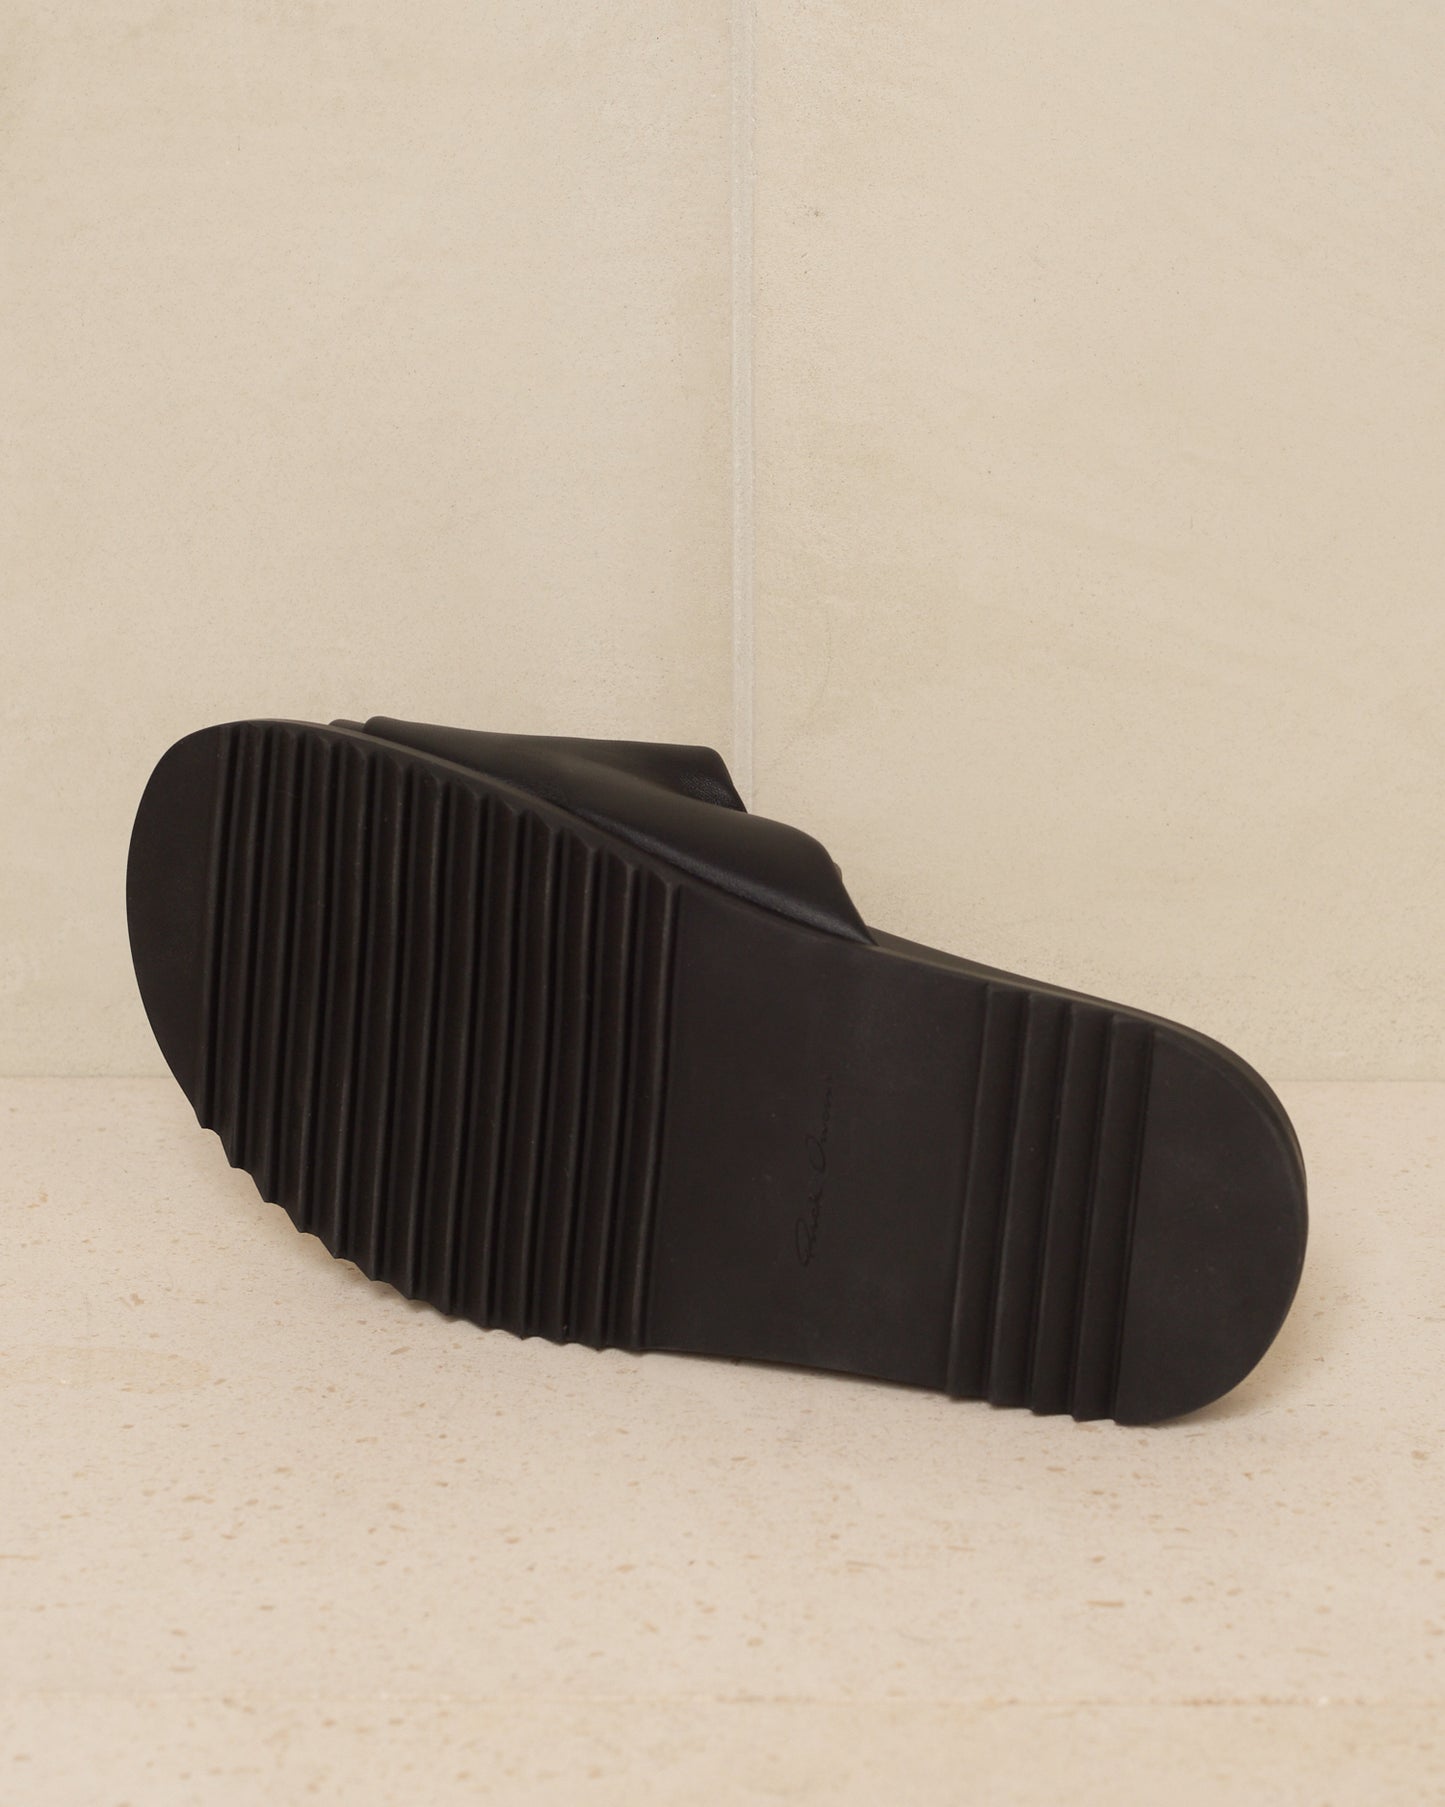 Black Mobius Granola Leather Sandal